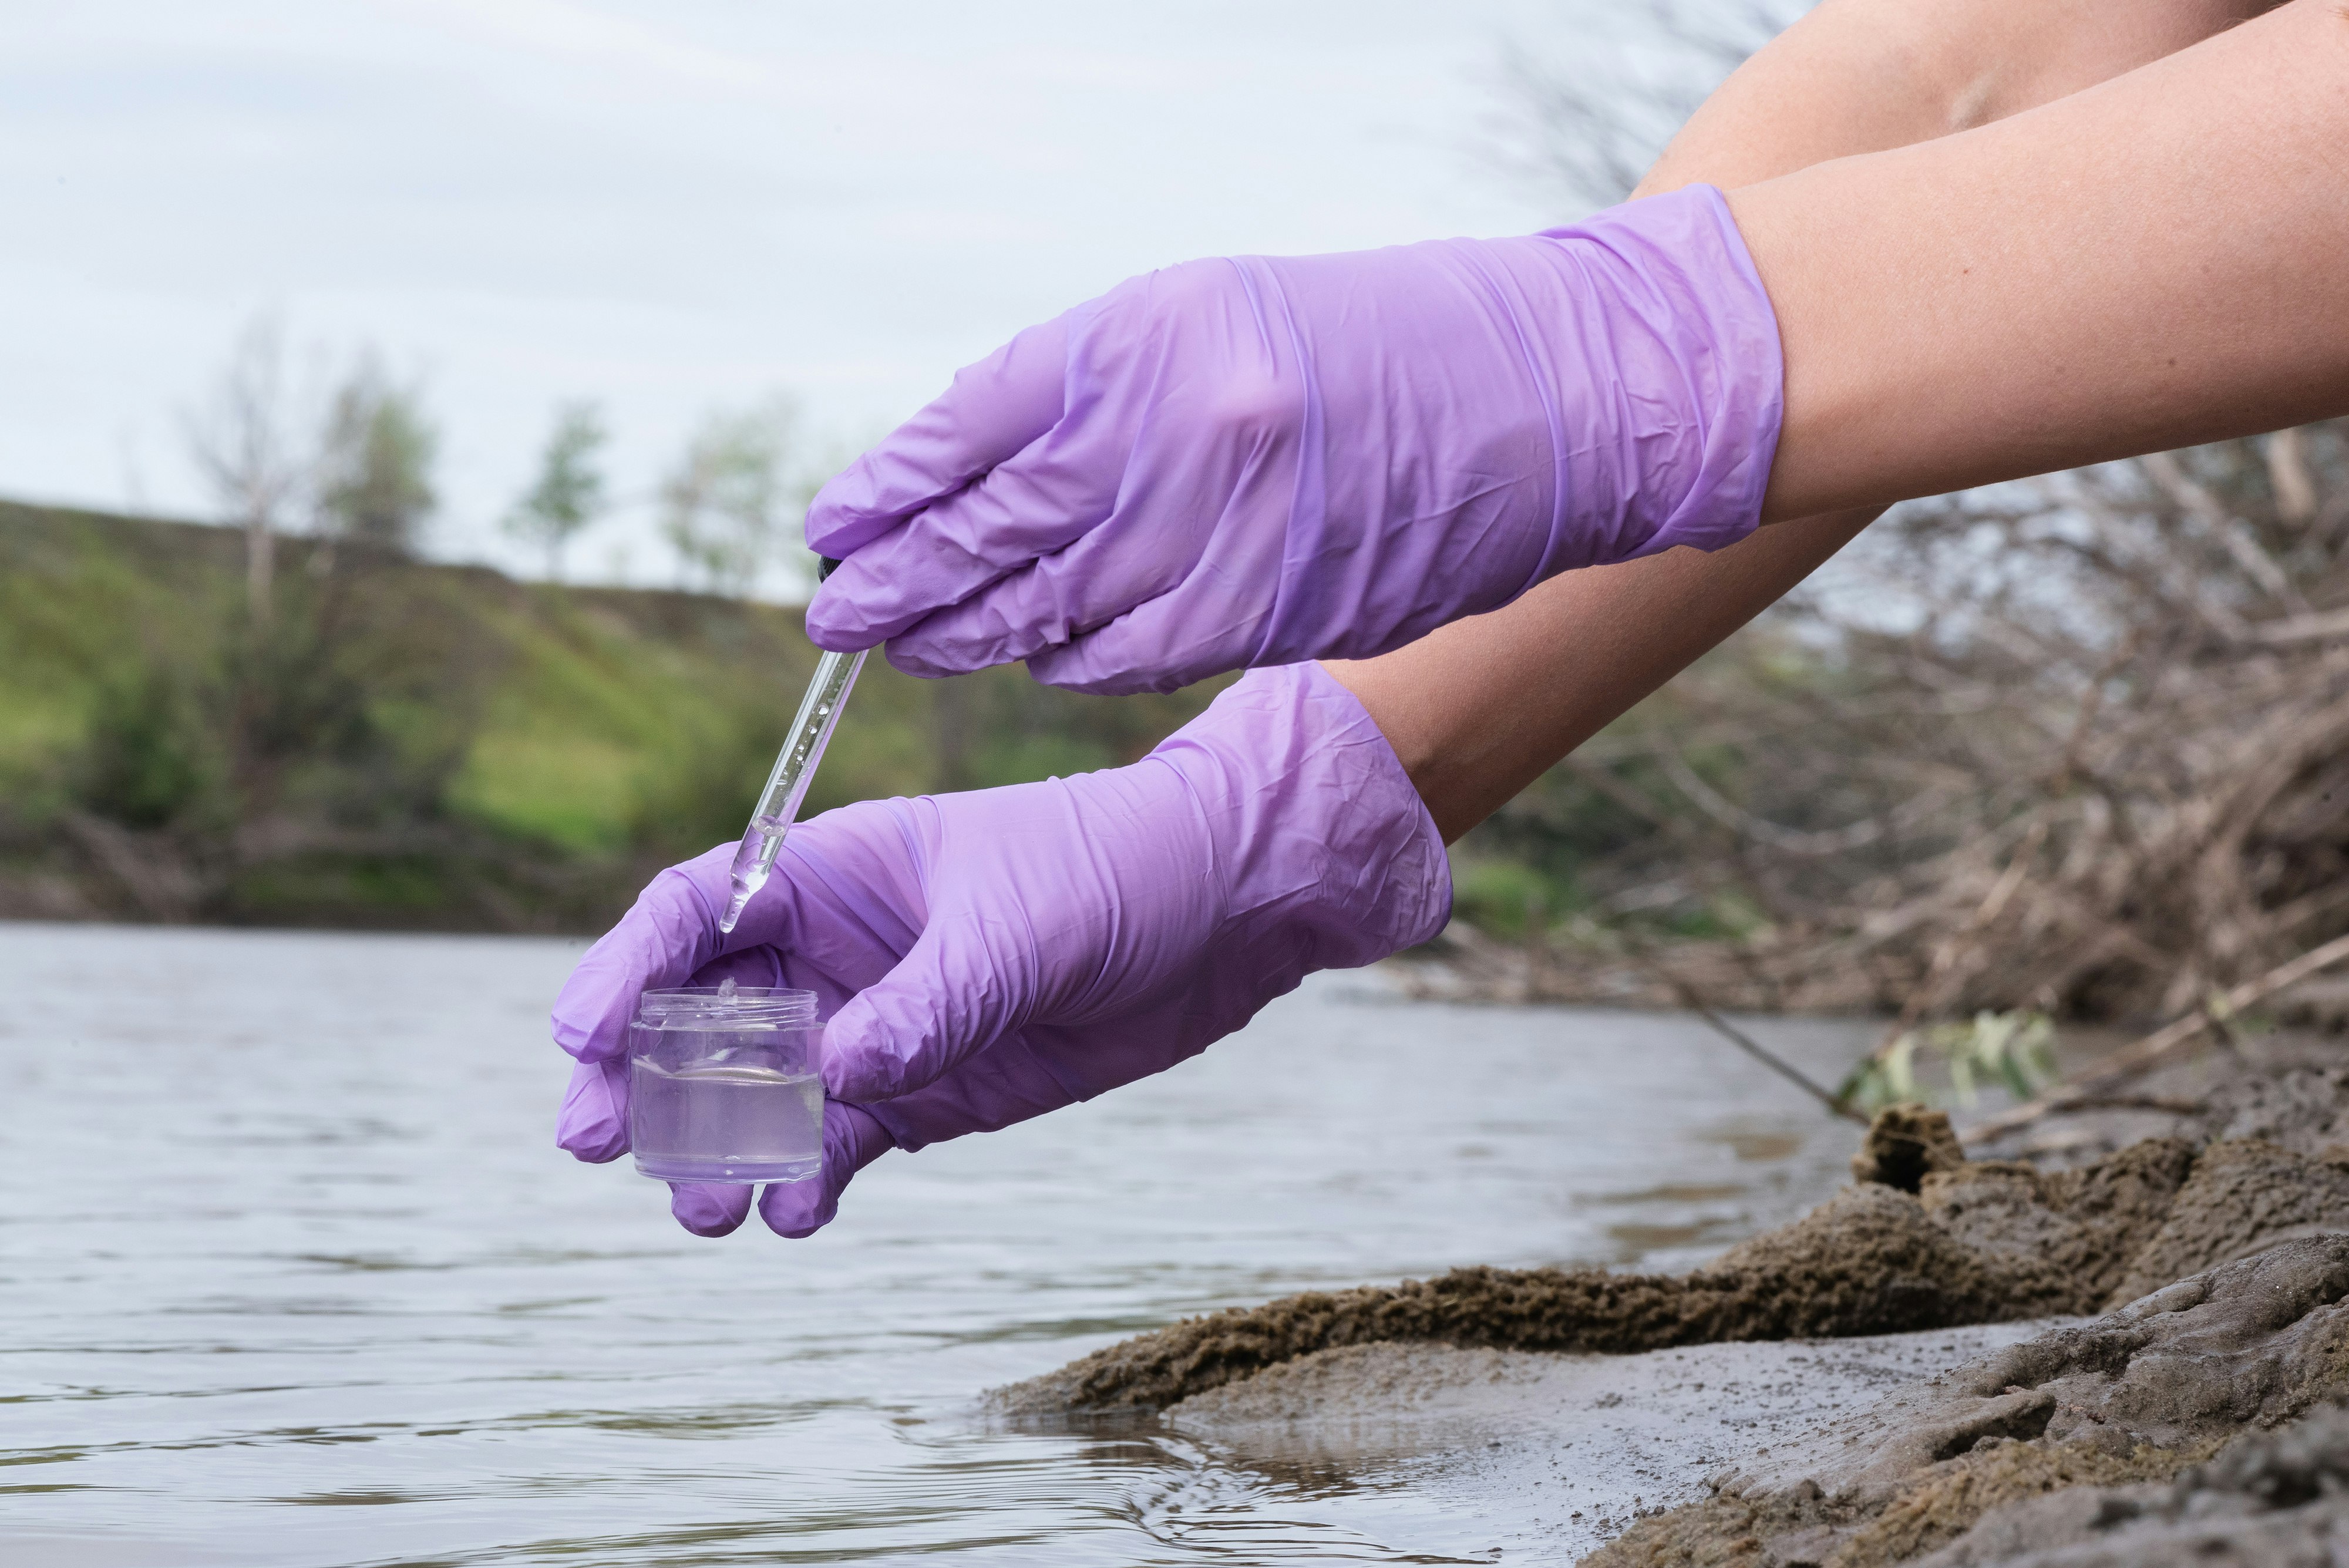 Water testing environmental impairment liability